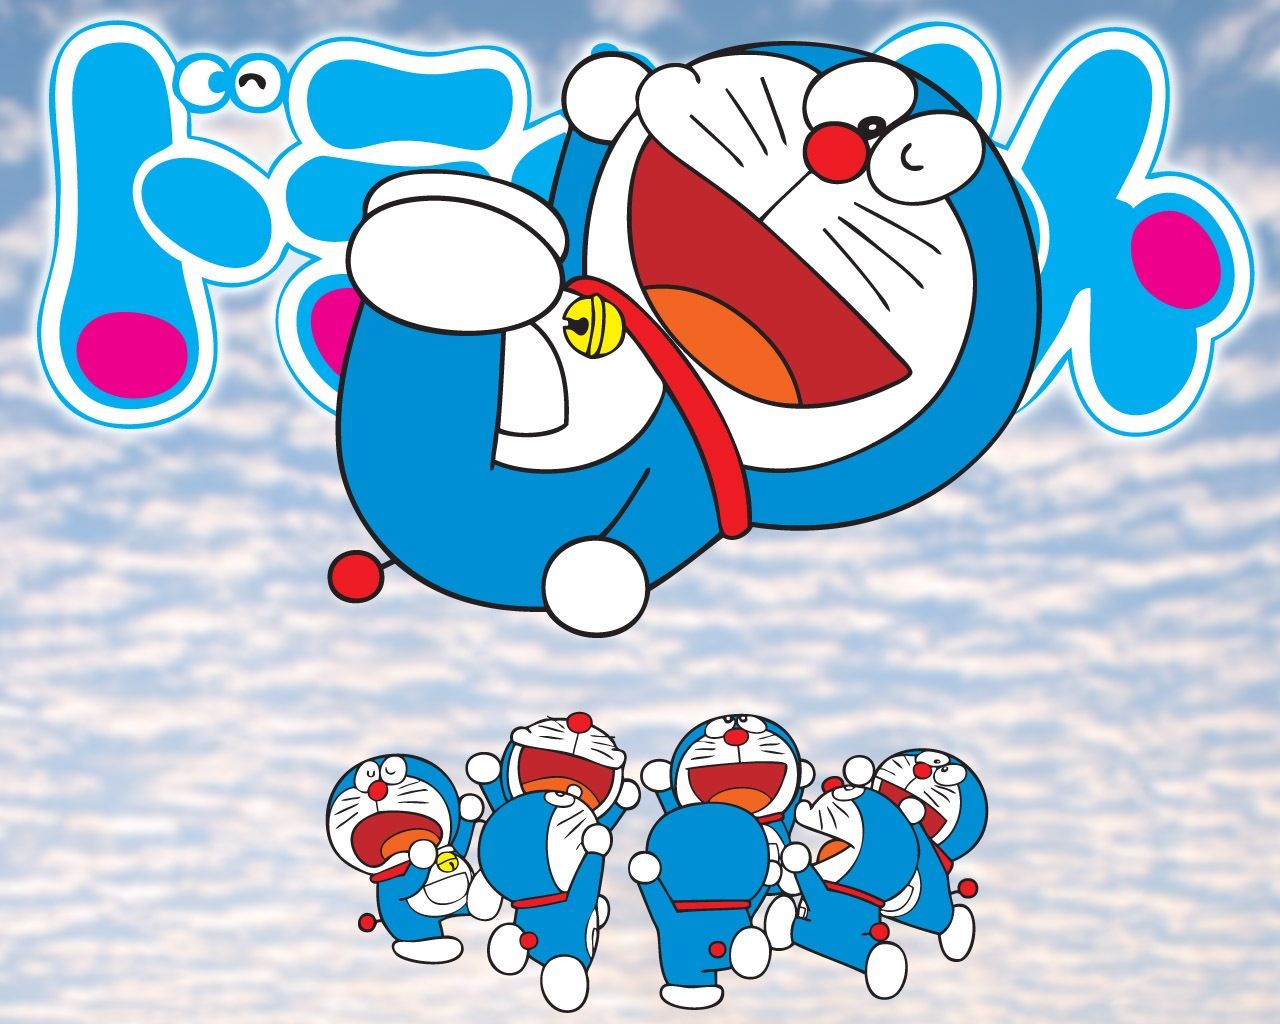 Doraemon and friends are flying in the sky - Doraemon